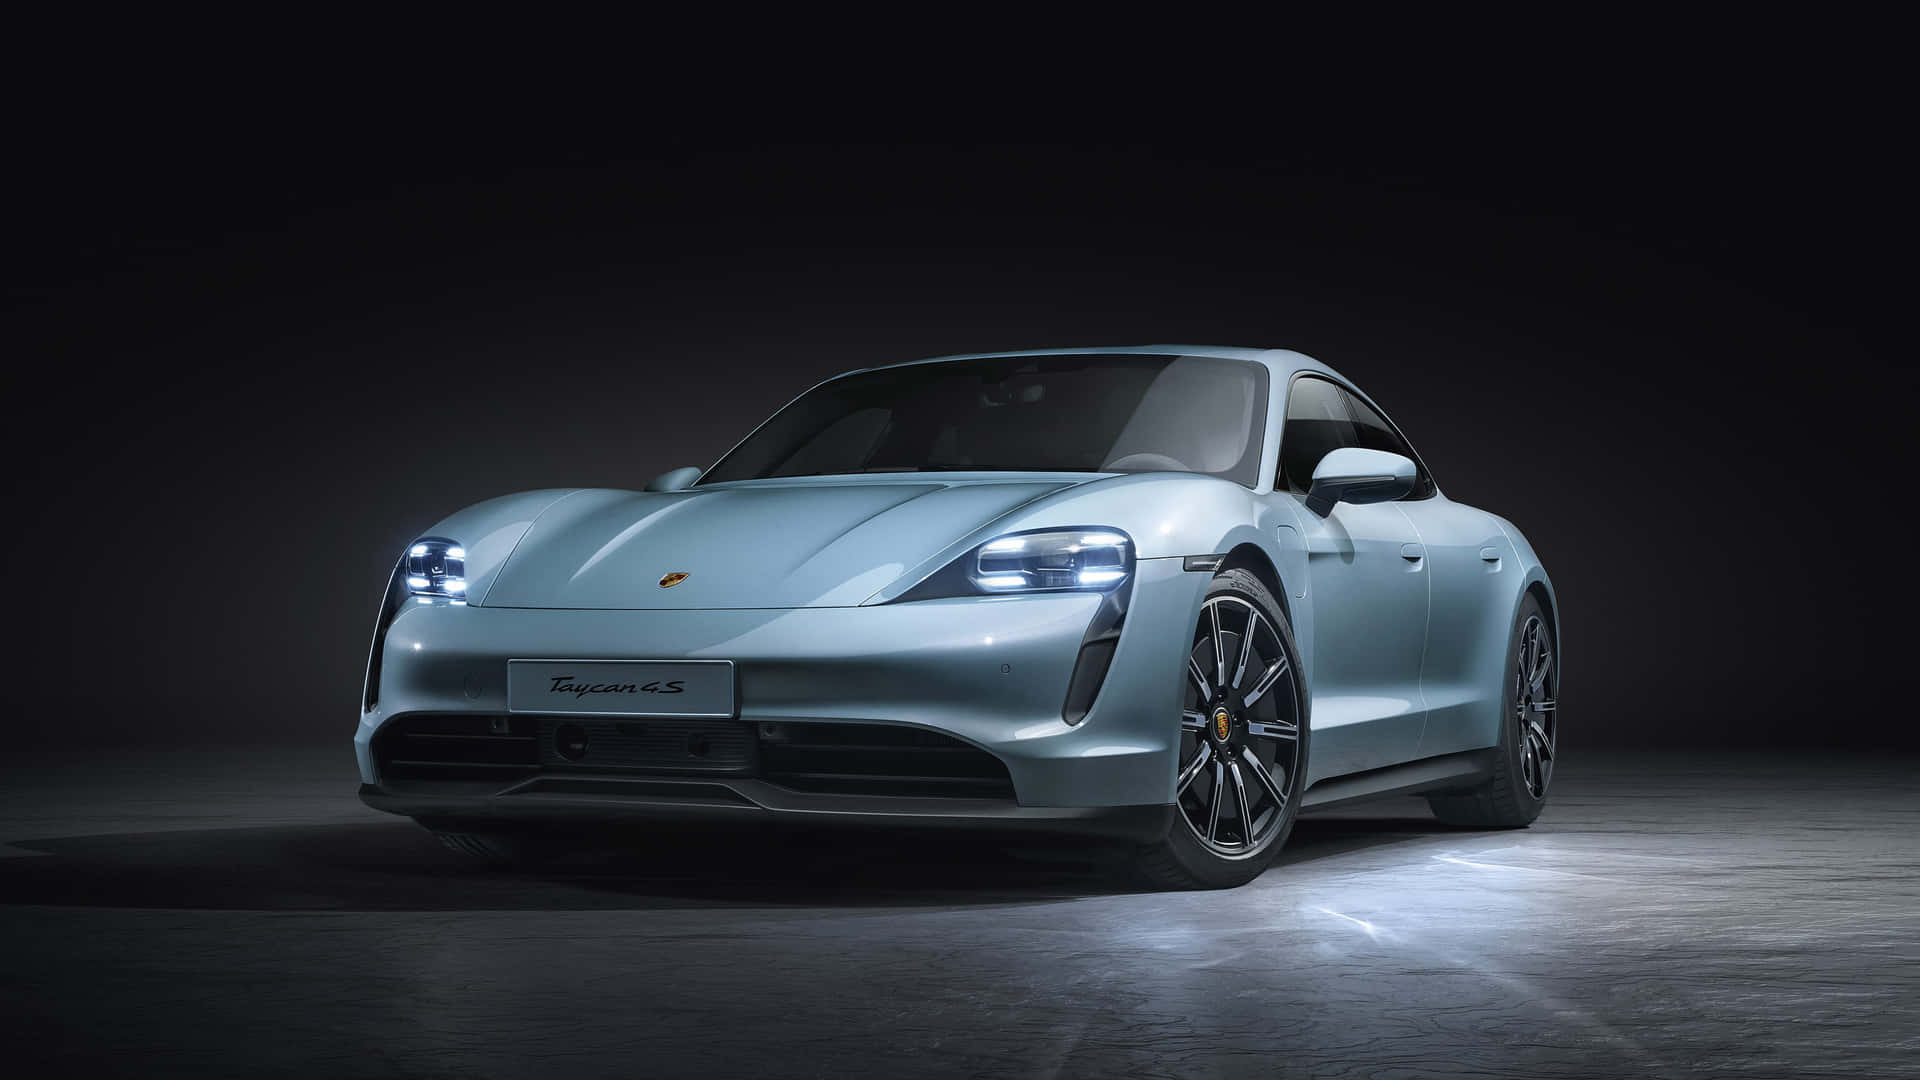 Enjoy The Elegance & Power Of A Porsche In 4k Ultra Hd